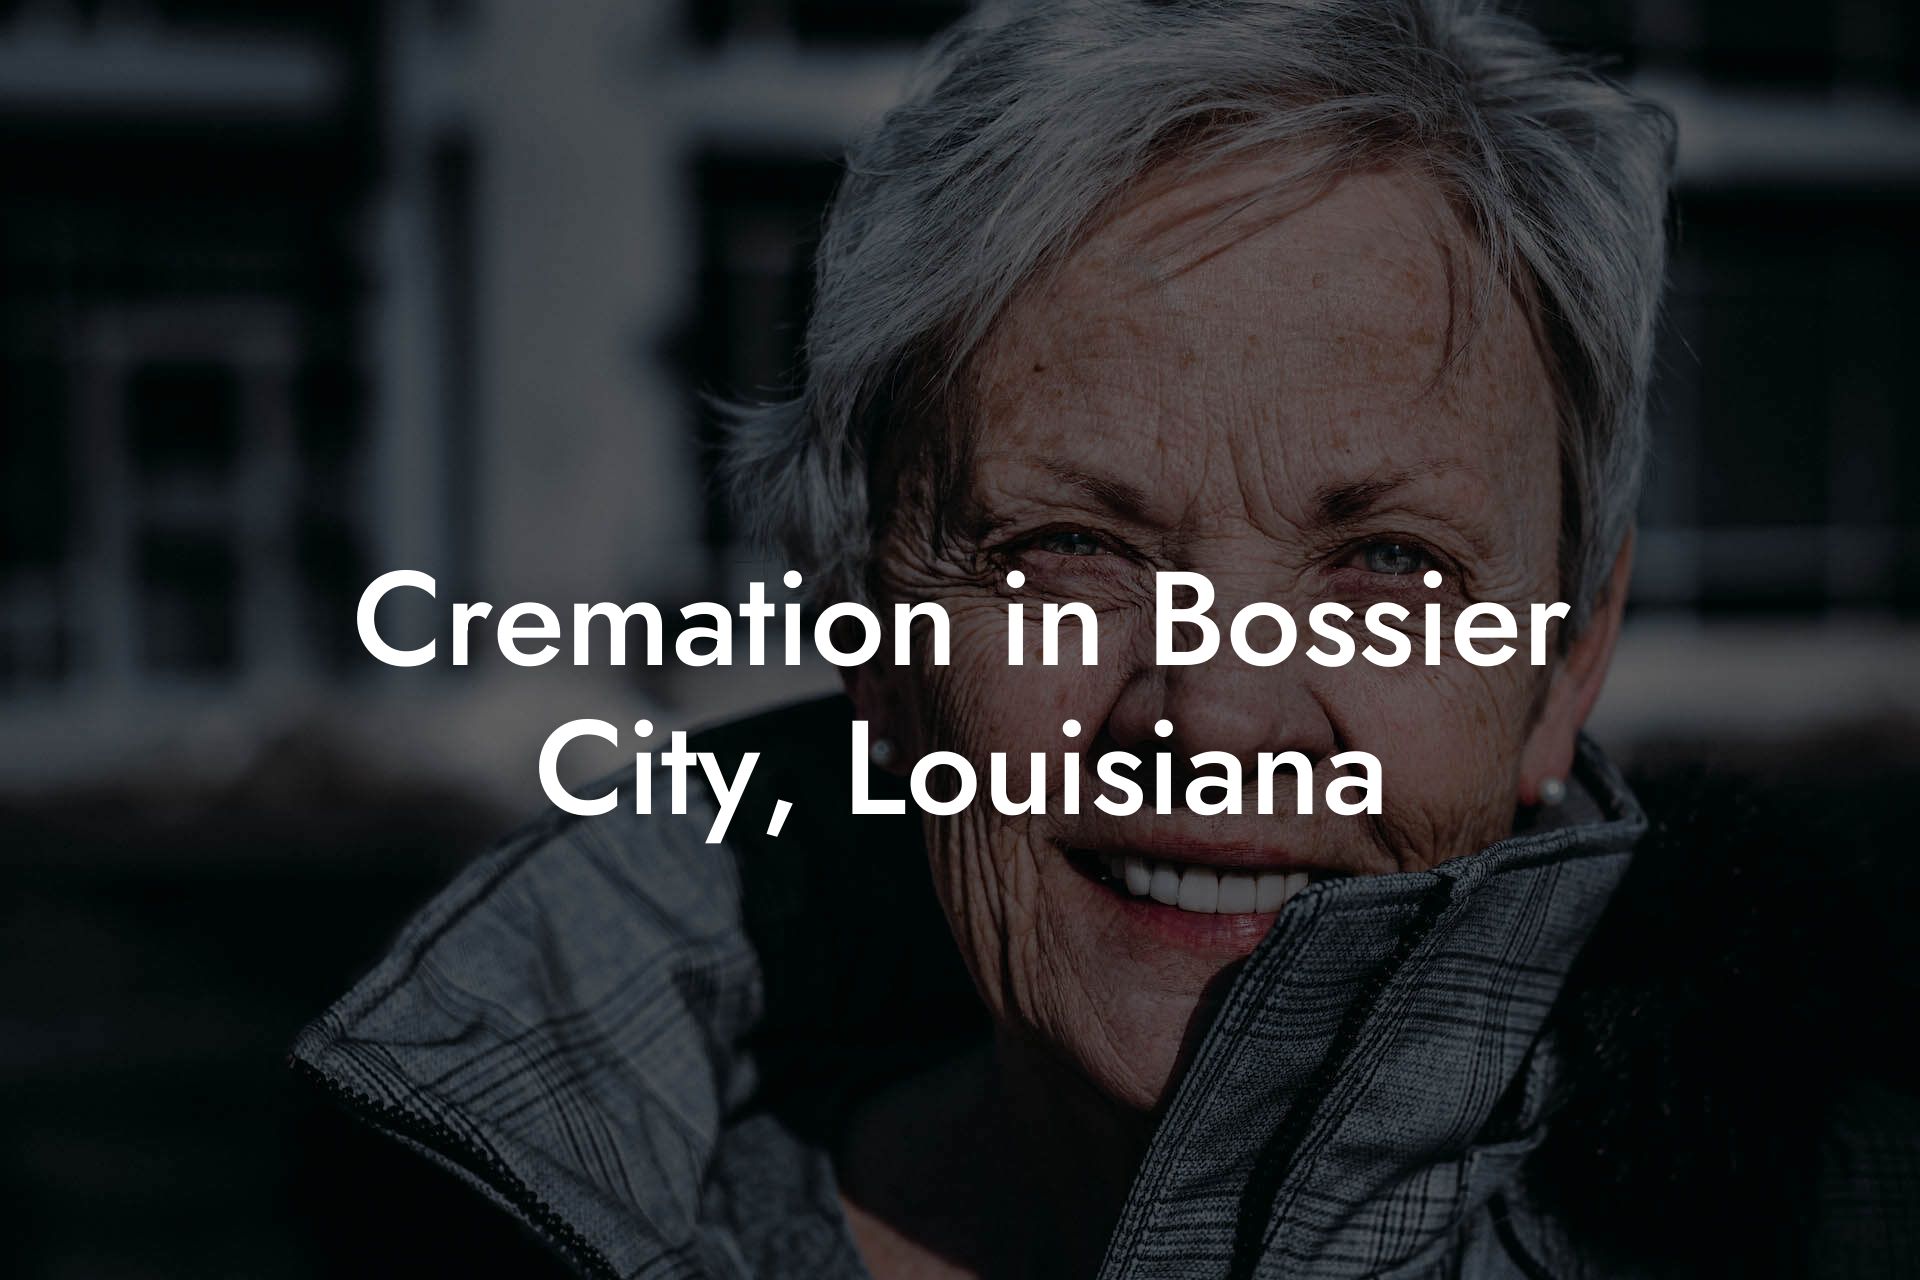 Cremation in Bossier City, Louisiana